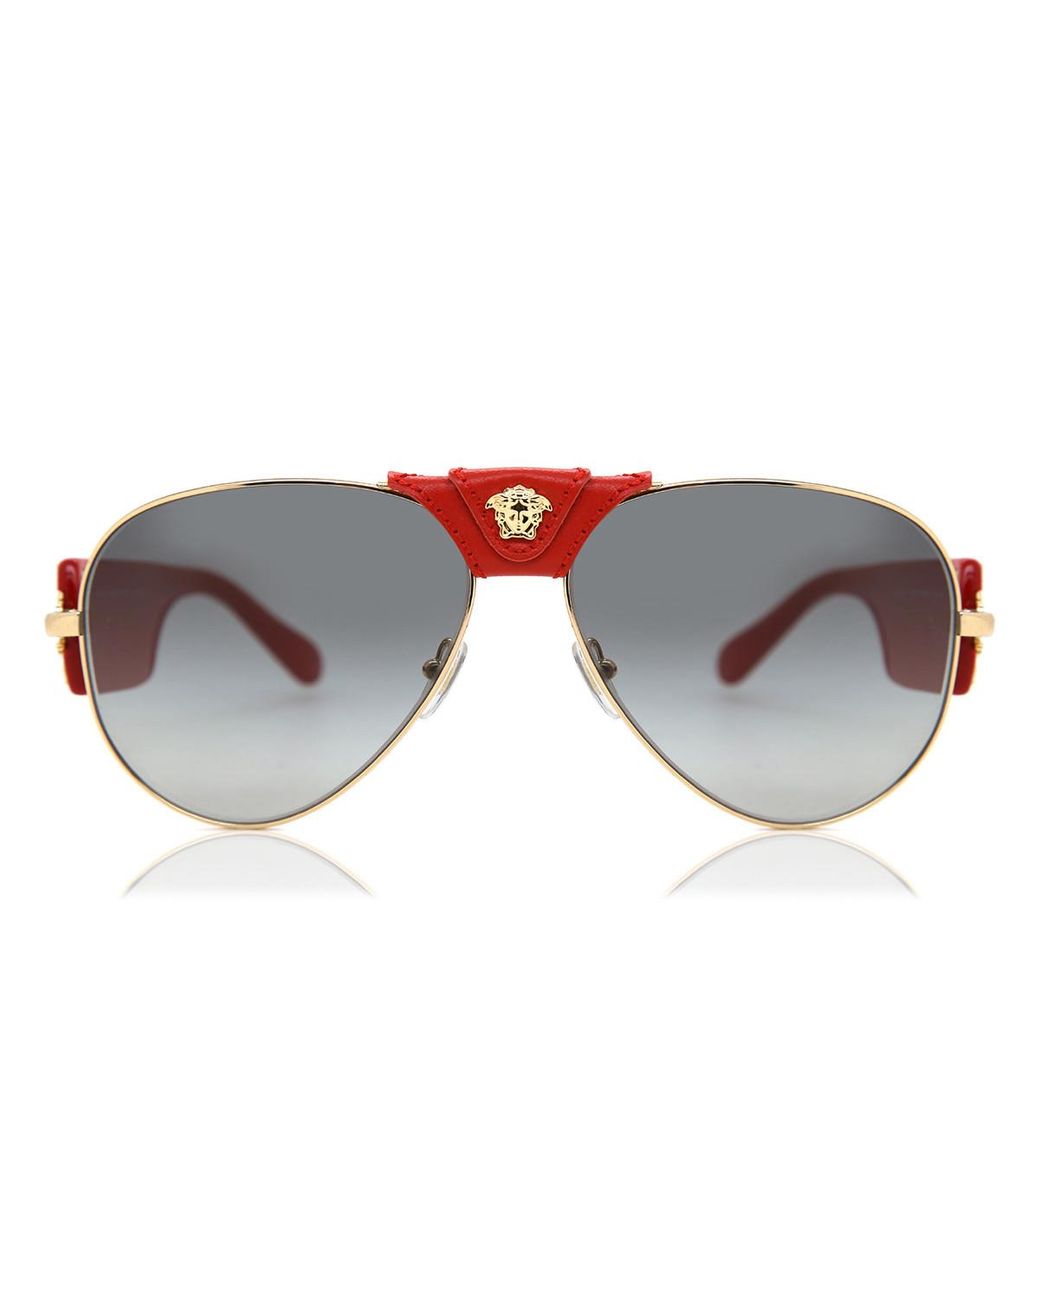 Versace Ve2150q 100211 Sunglasses Red in Gold (Metallic) for Men - Lyst